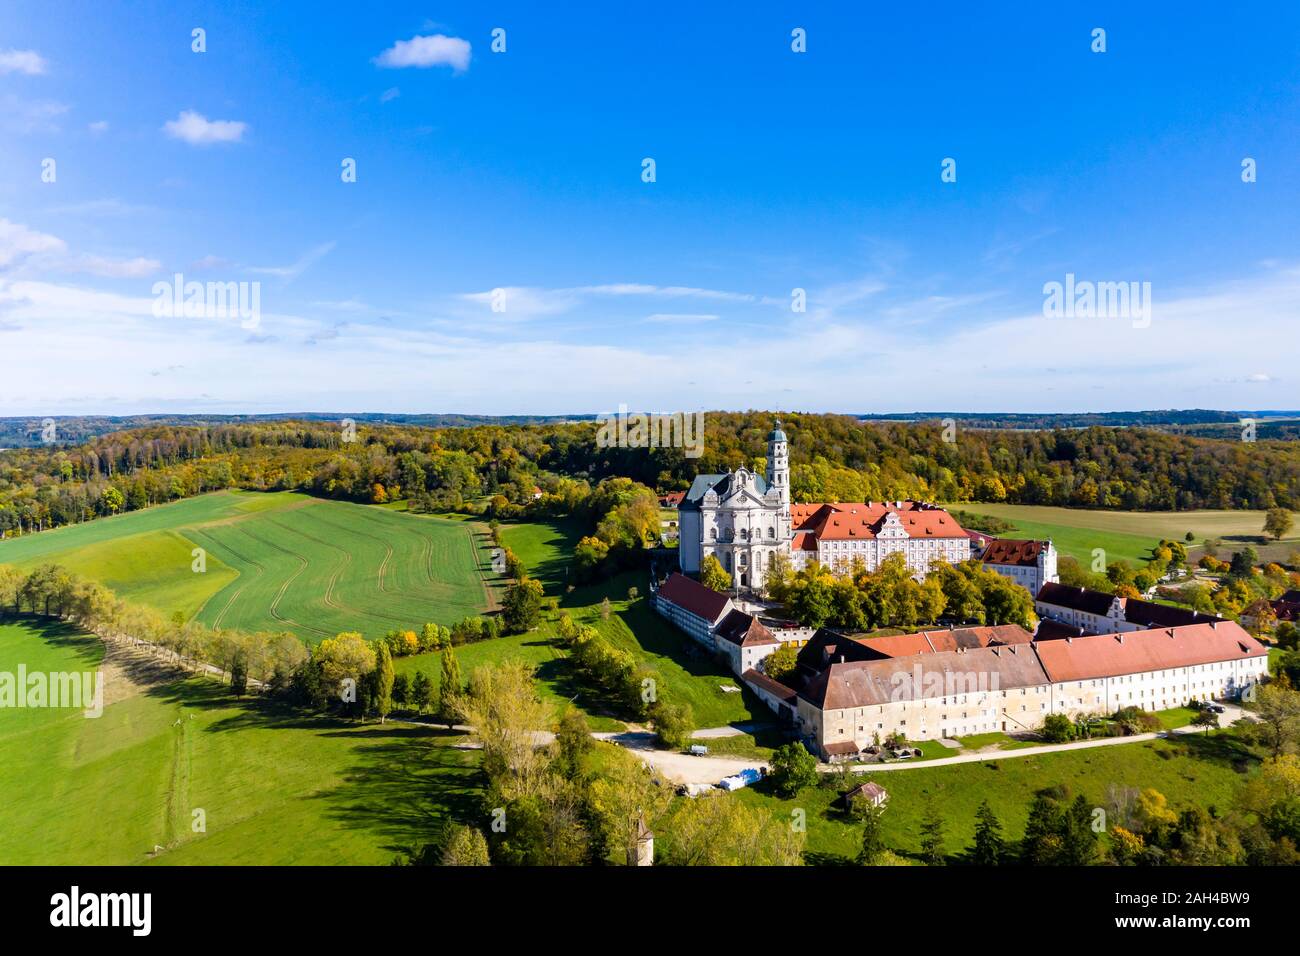 Allemagne, Bade-Wurtemberg, Neresheim, vue aérienne du monastère bénédictin, l'abbaye de Neresheim Banque D'Images